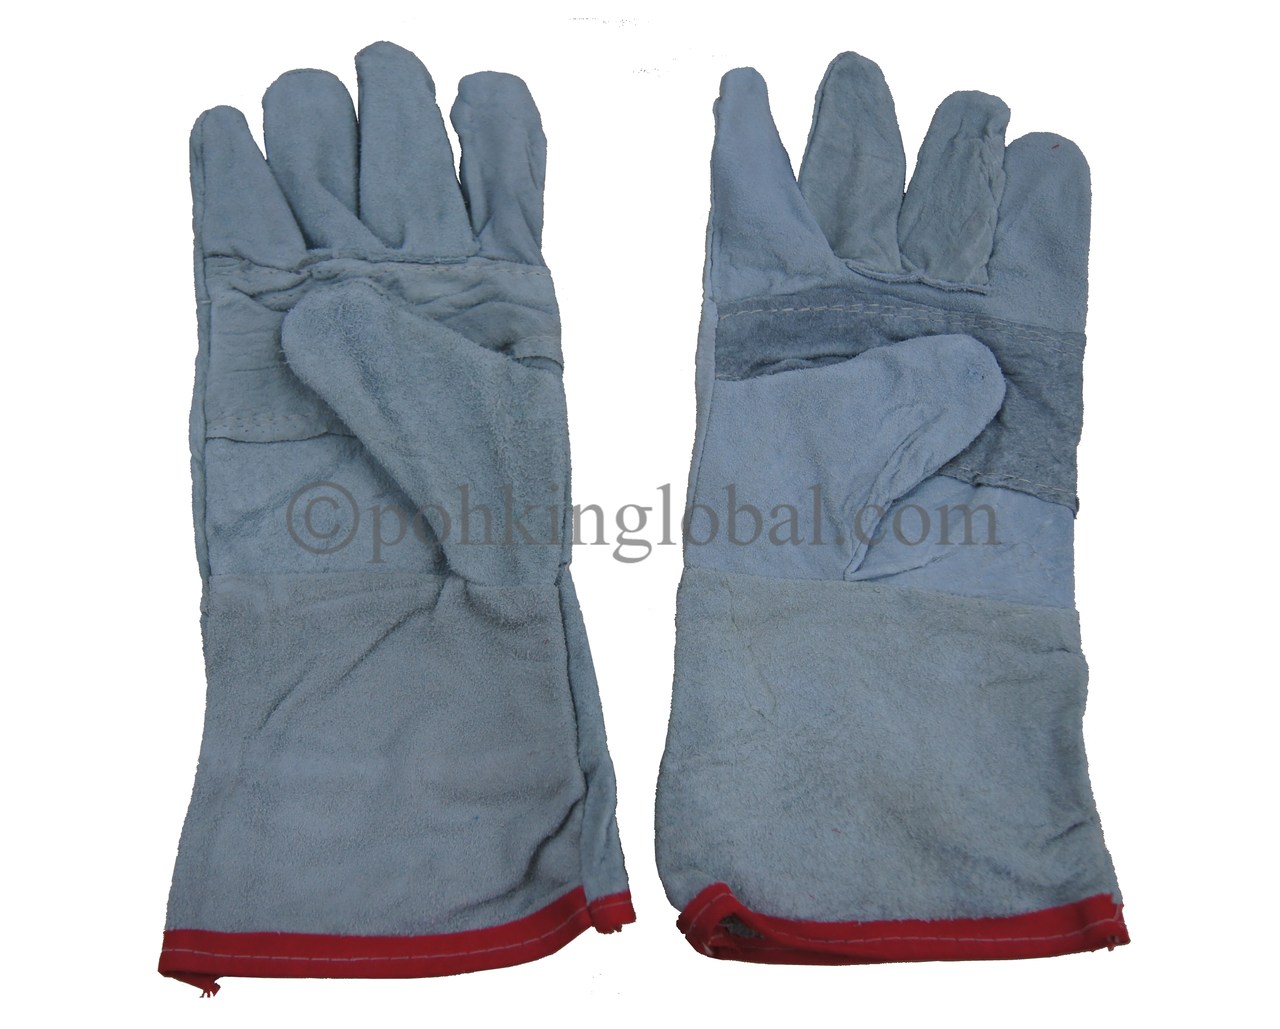 PKG #1313 - Welding Gloves (Grey)